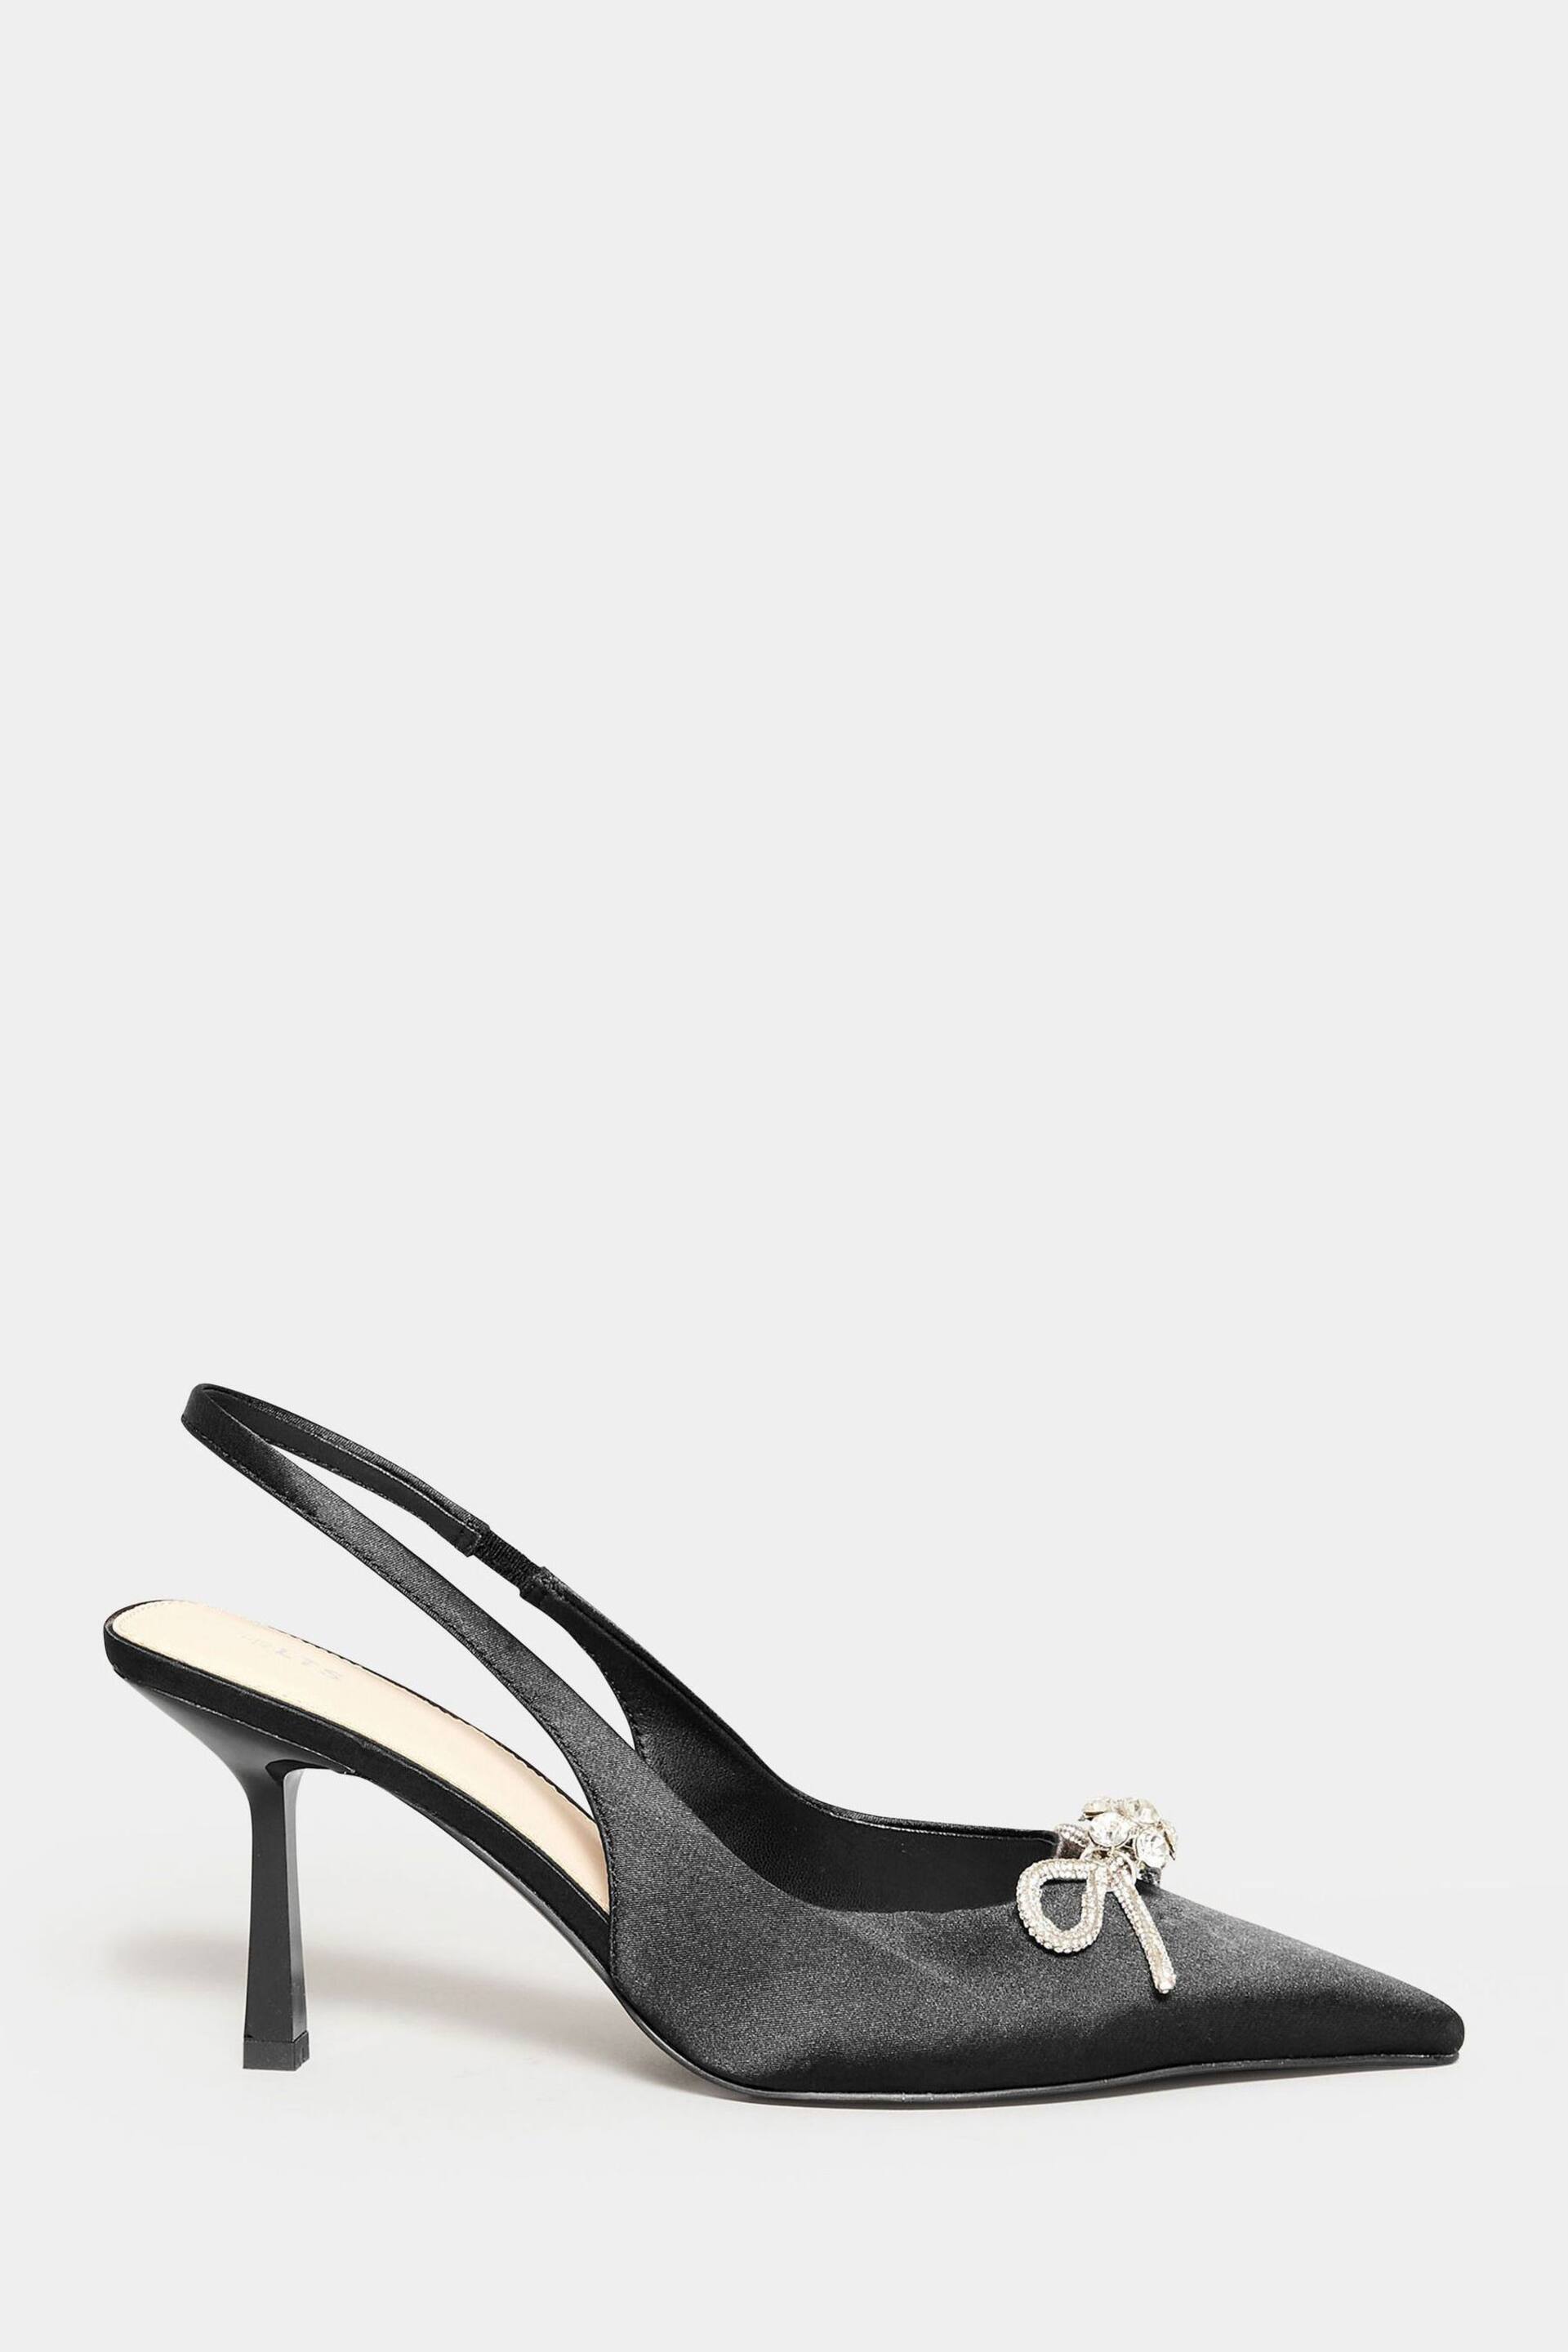 Long Tall Sally Black Sliver Slingback Kitten Heel Court Shoes - Image 1 of 3